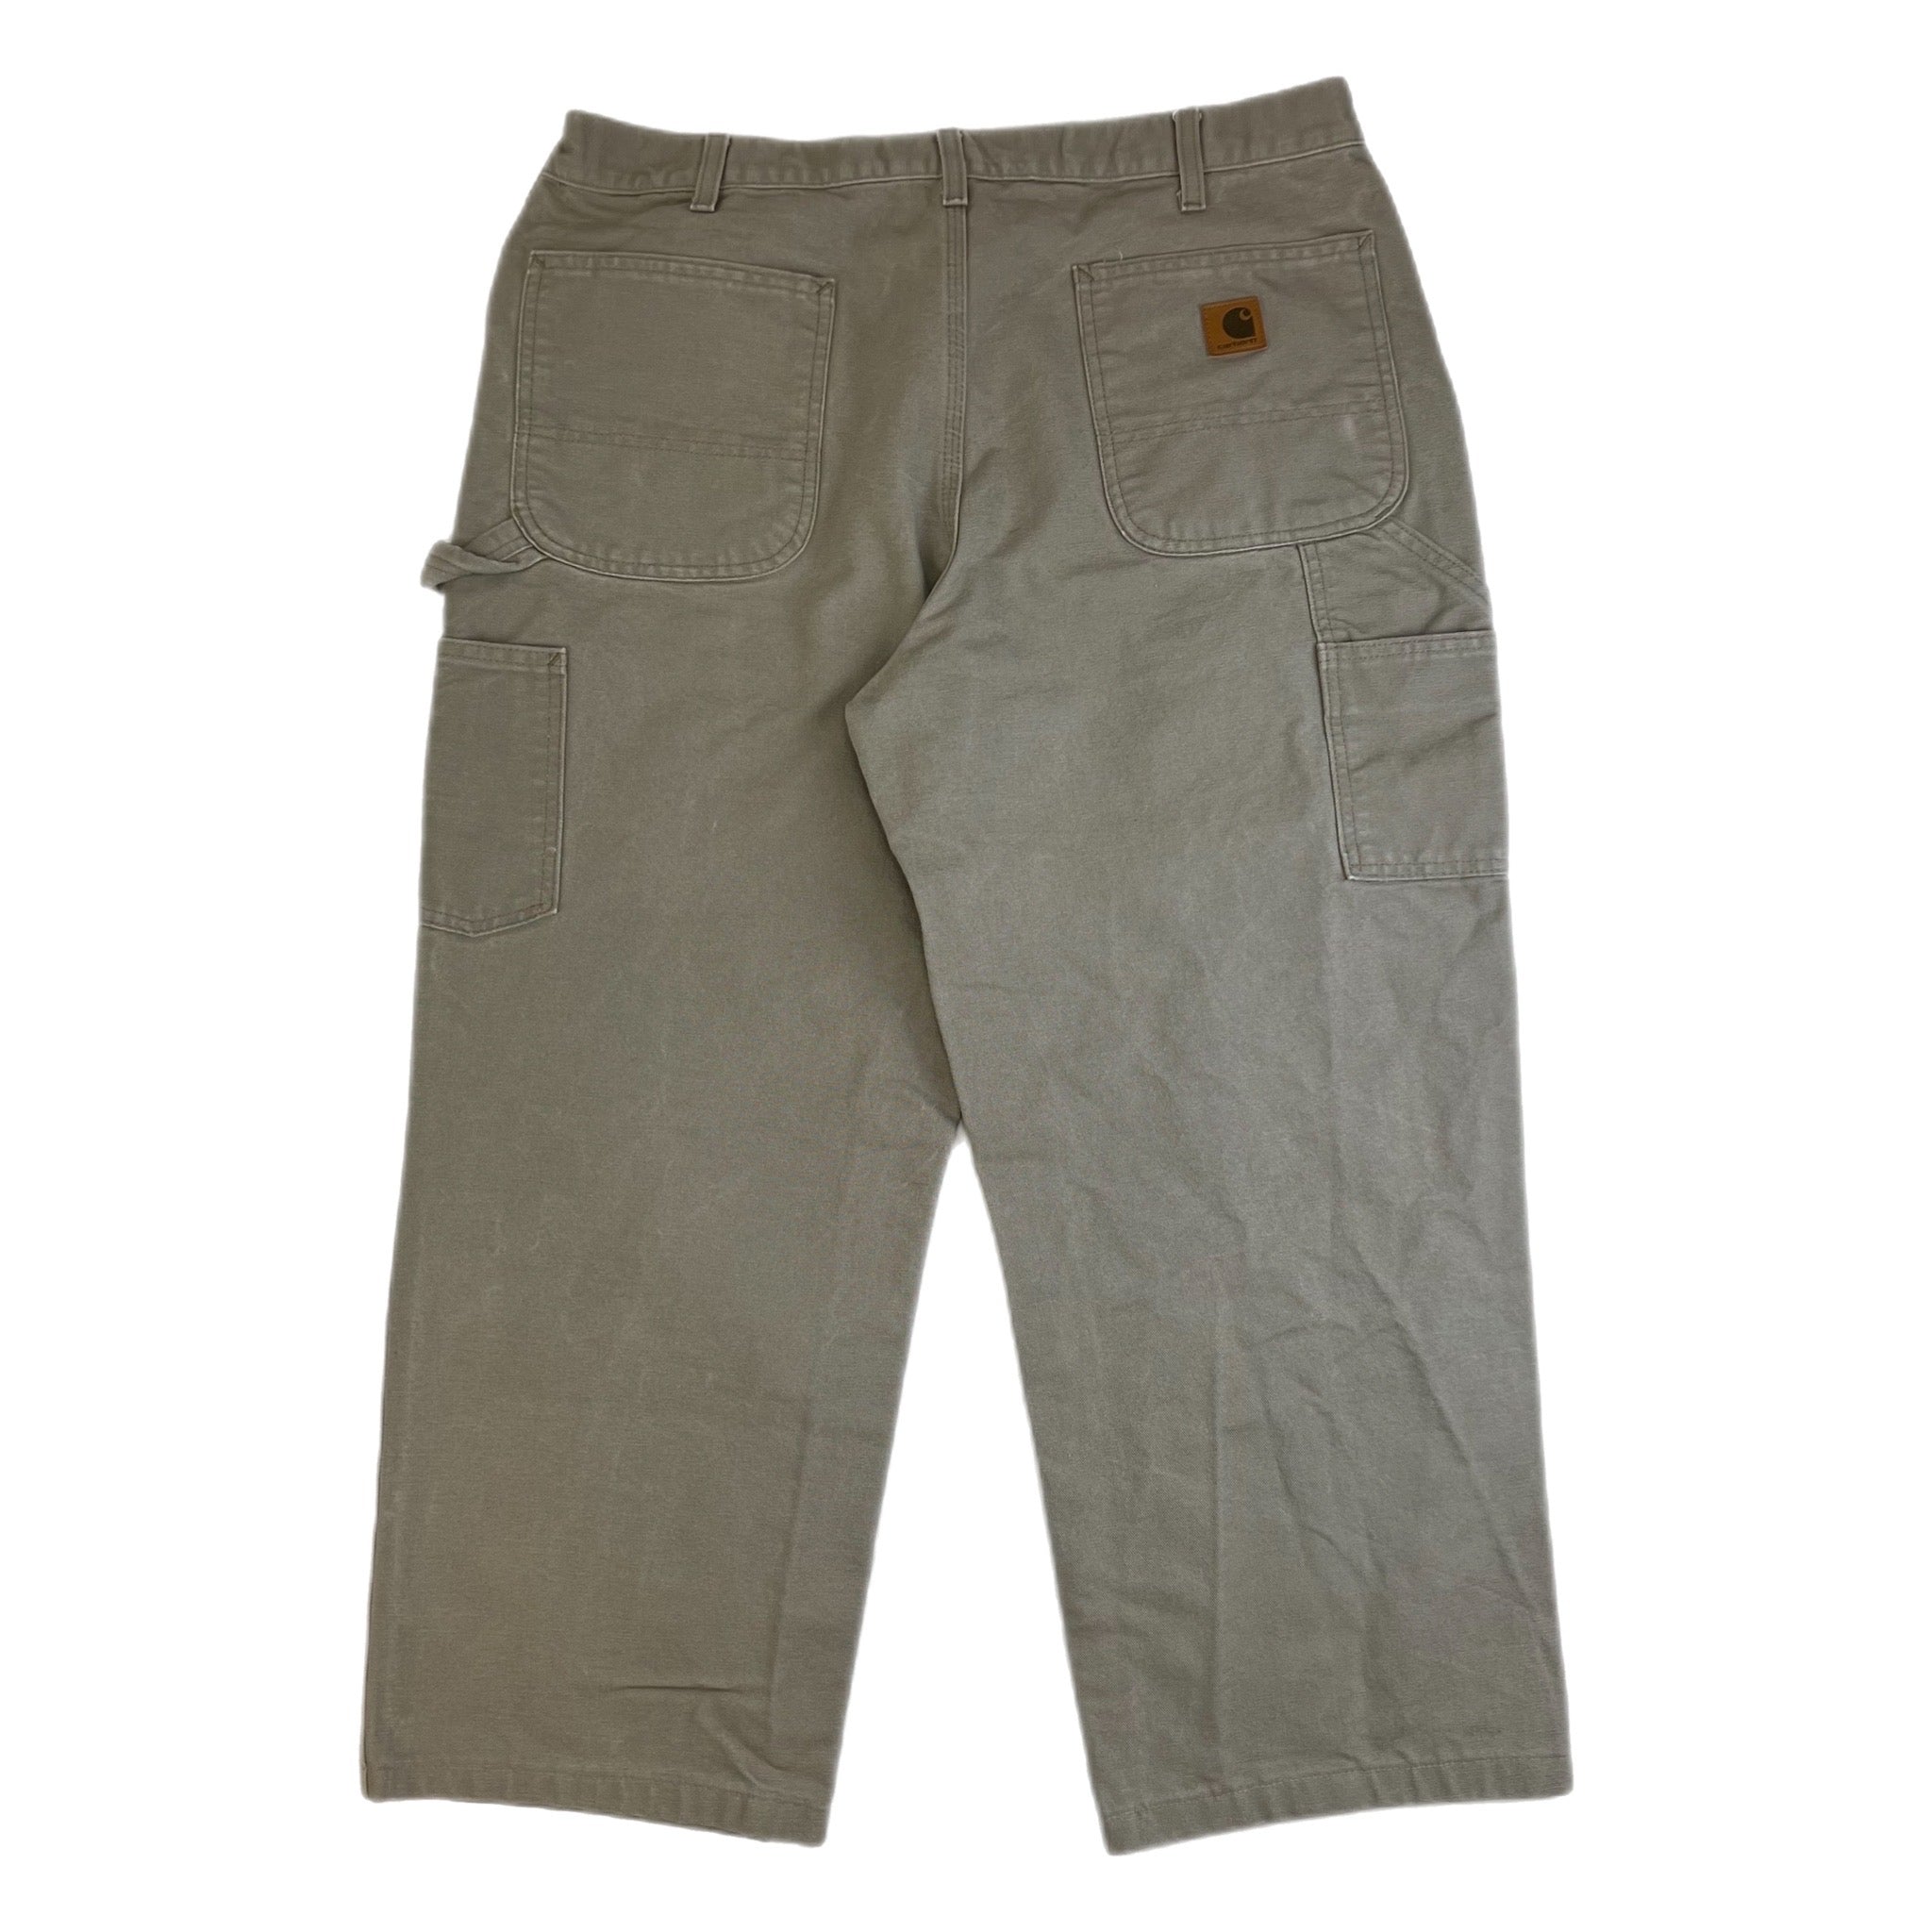 Vintage Carhartt Cargo Pants Tan